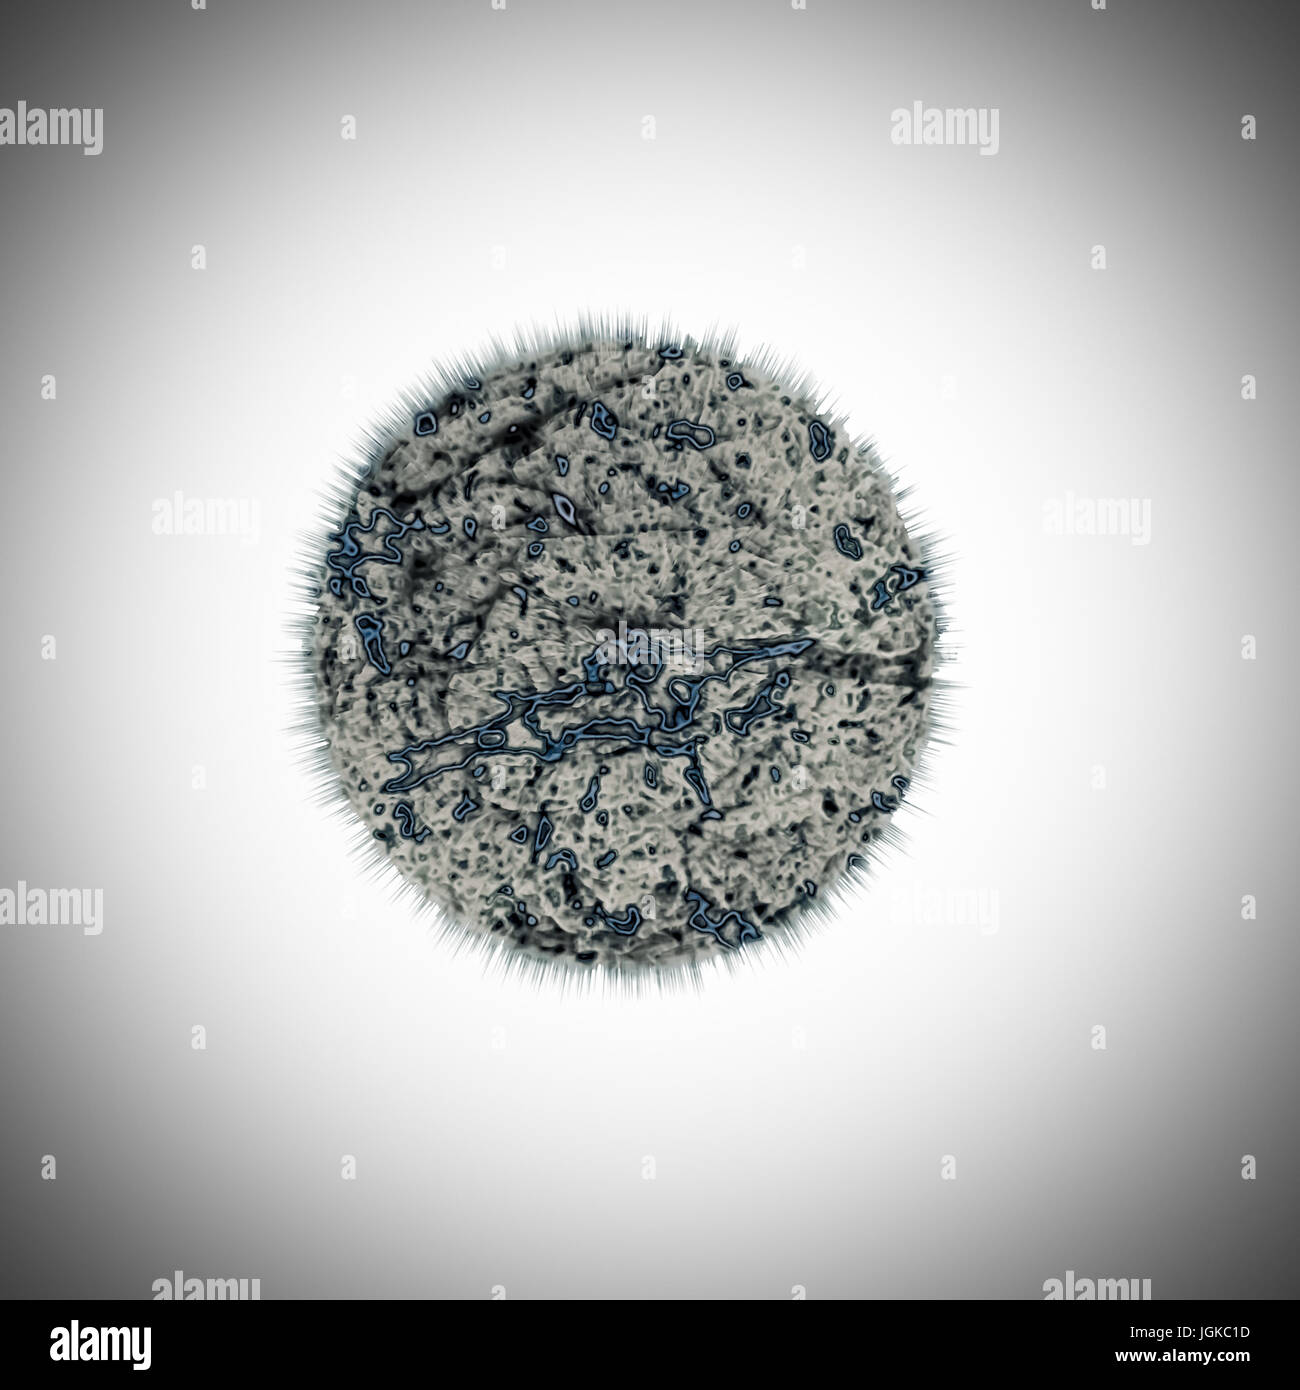 Superbug - Absract Illustration Stock Photo